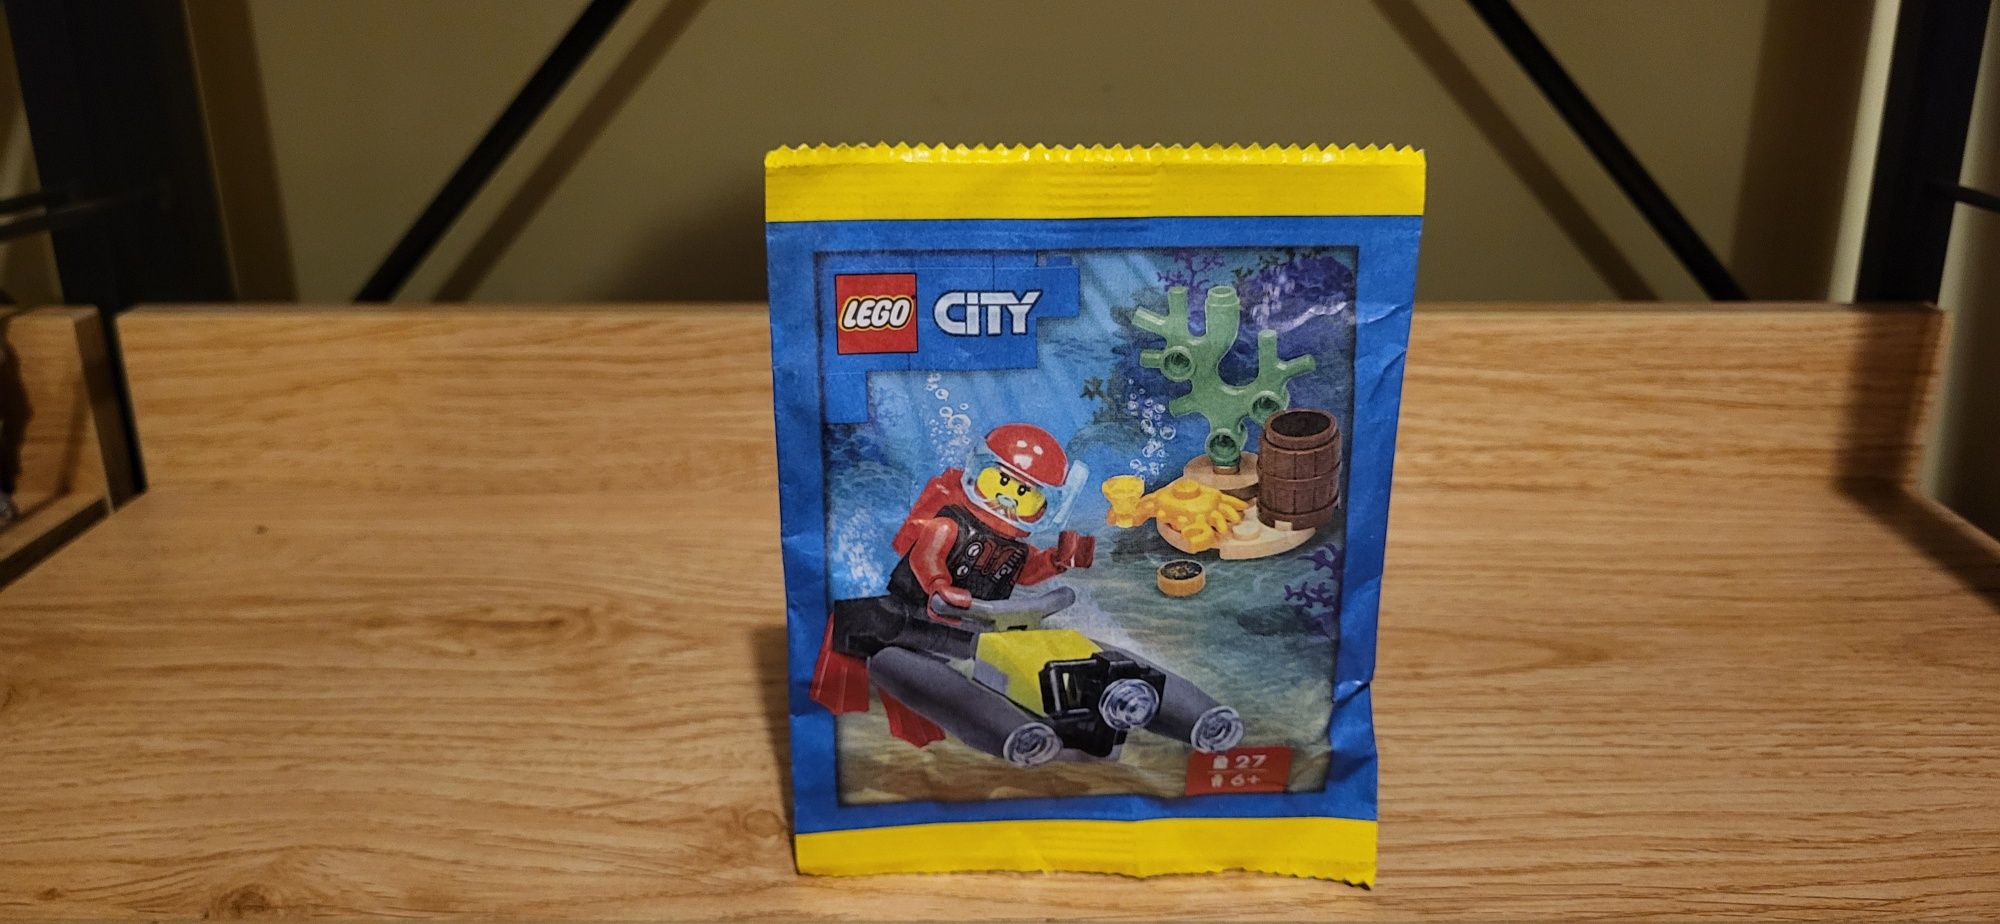 Lego City 952311 Nurek saszetka z klockami